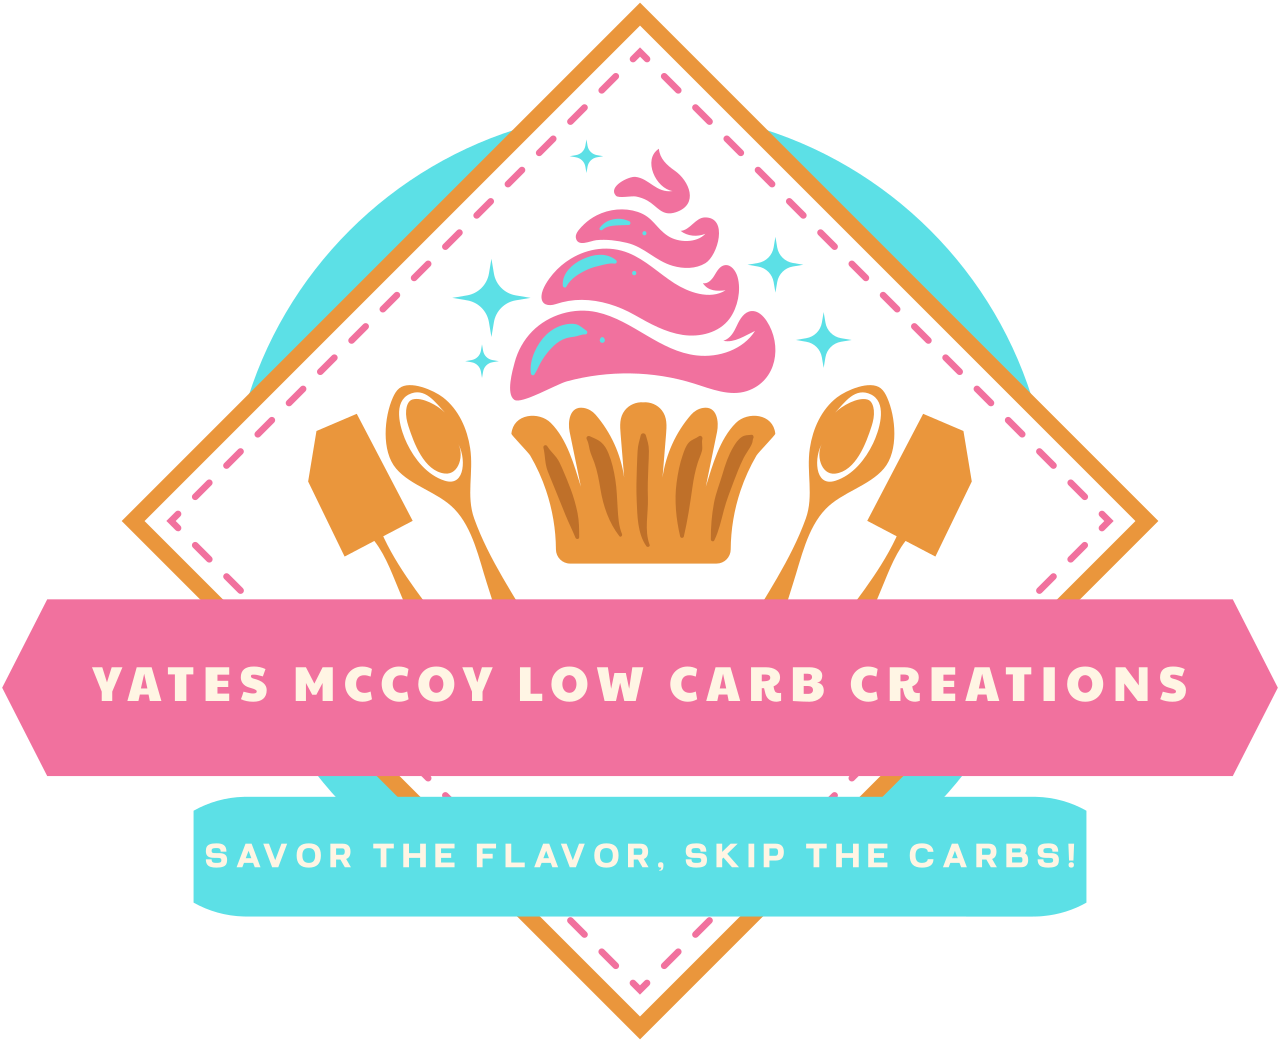 Yates McCoy Low Carb Creations's logo